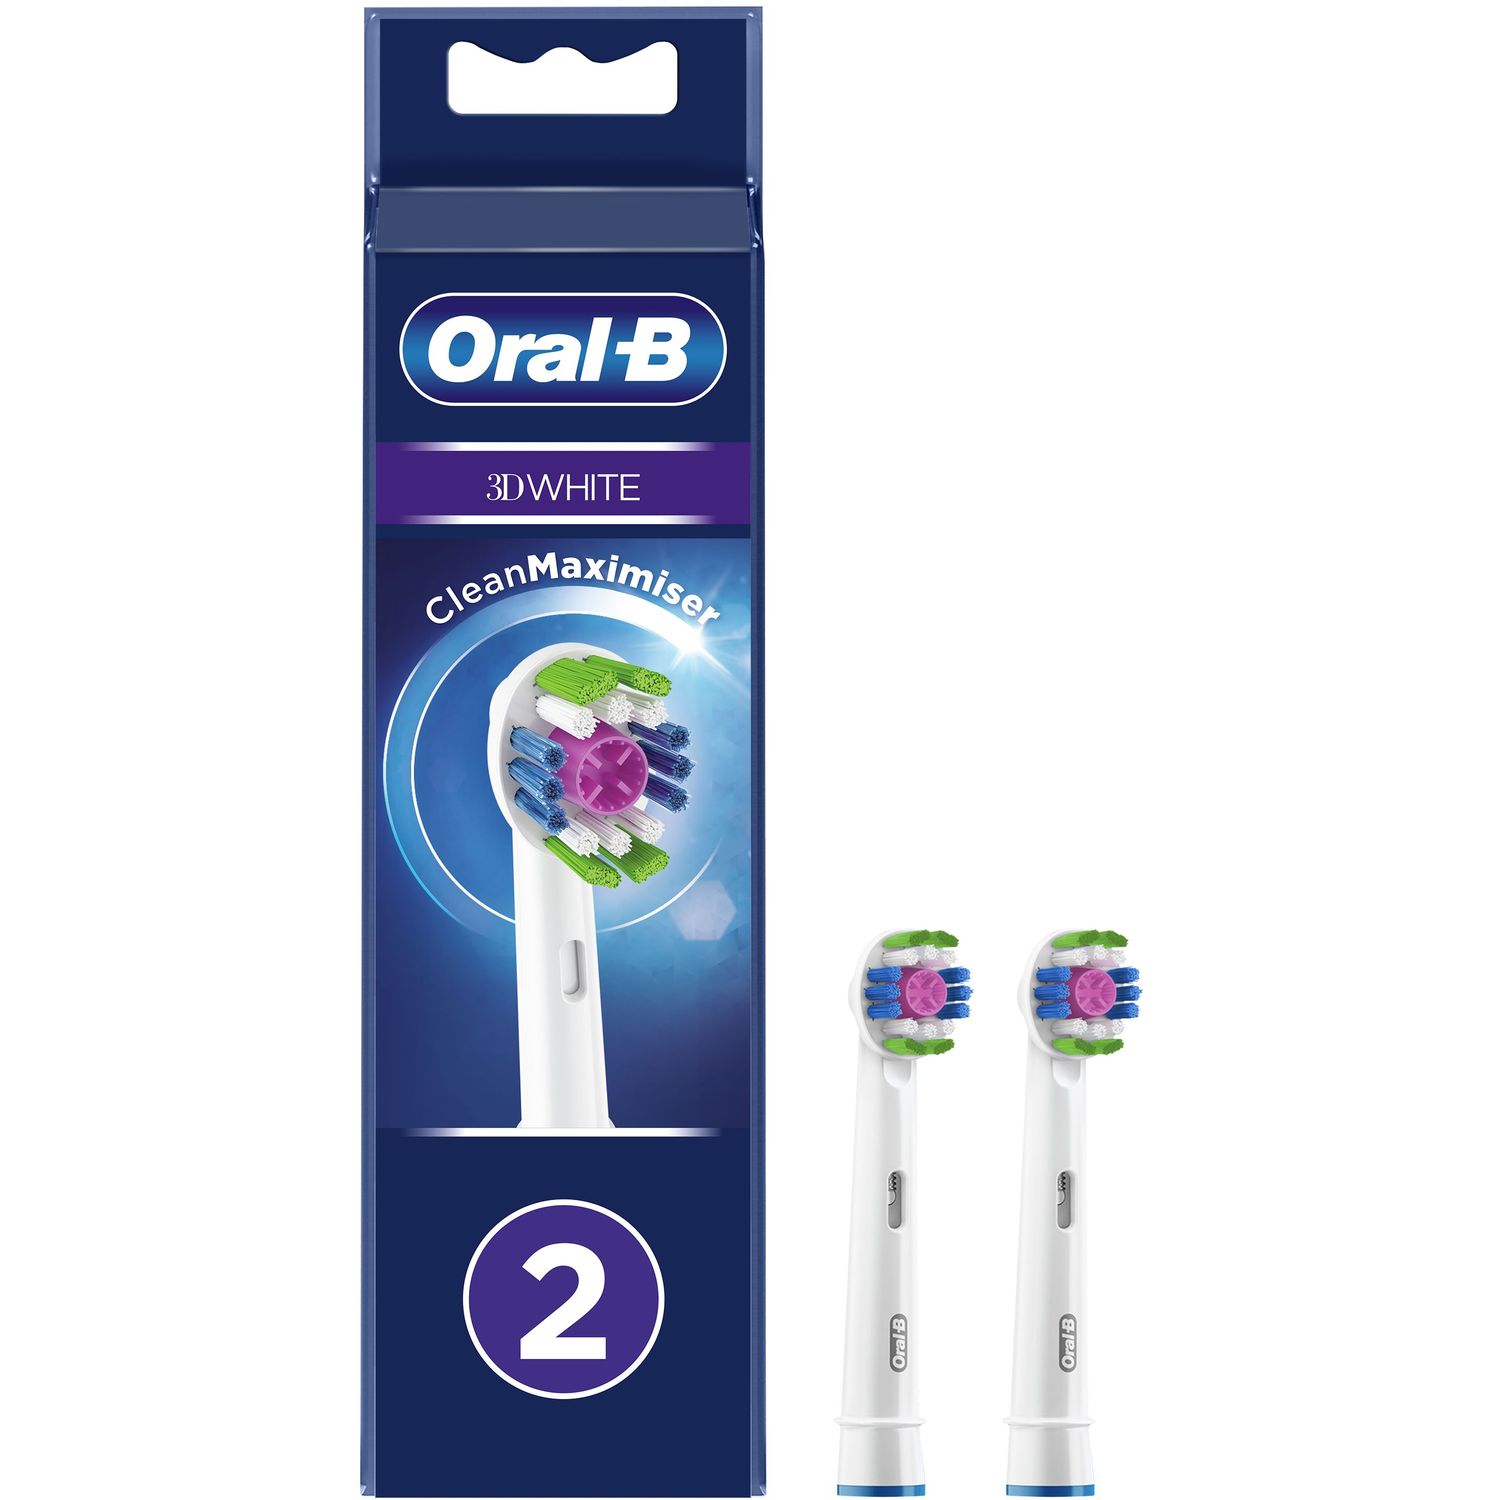 Насадки для электрической зубной щётки Oral-B 3D White CleanMaximiser, 2 шт. - фото 1